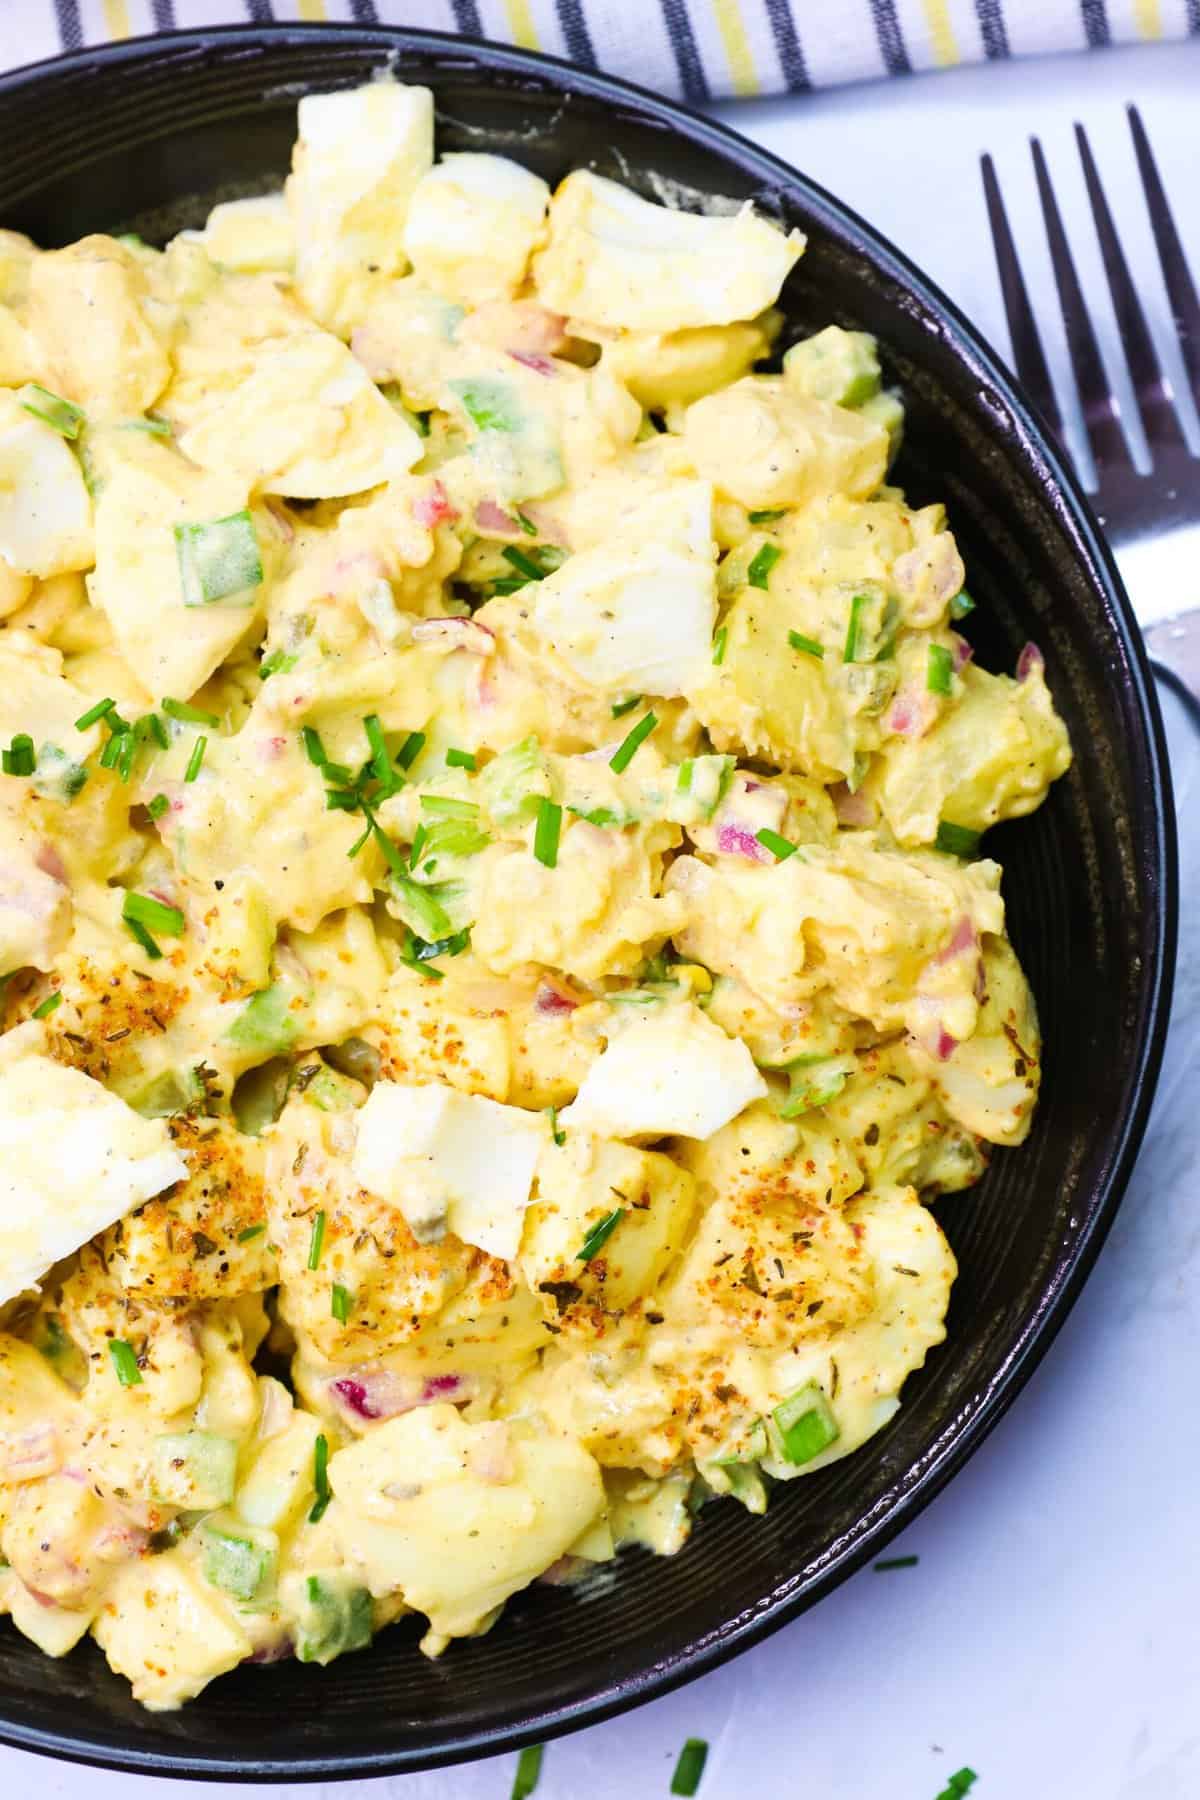 Serve delicious deviled egg potato salad